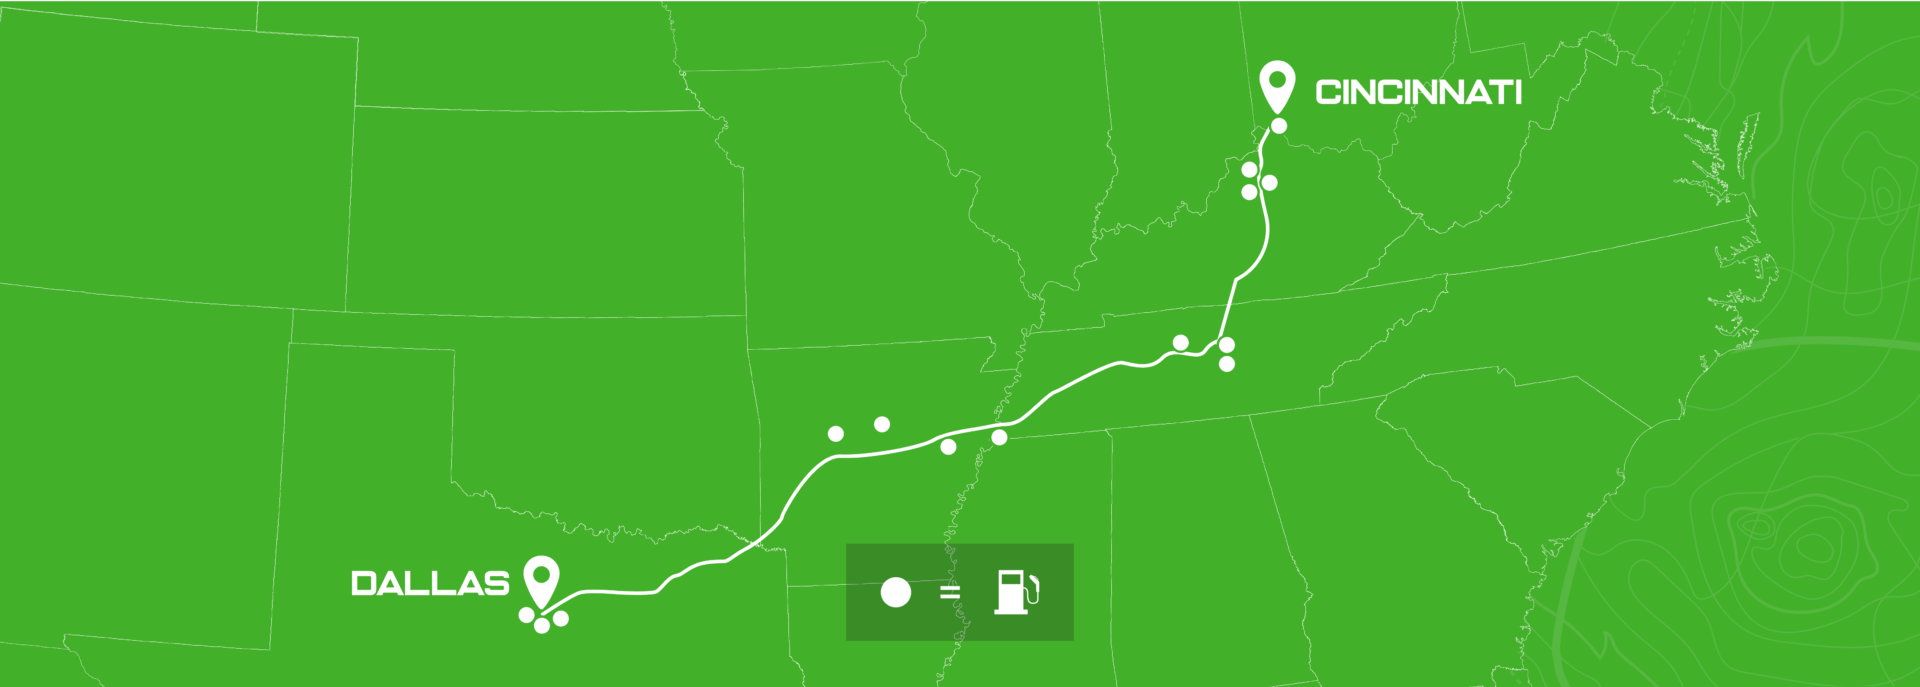 Cincinnati to Dallas - 963 miles